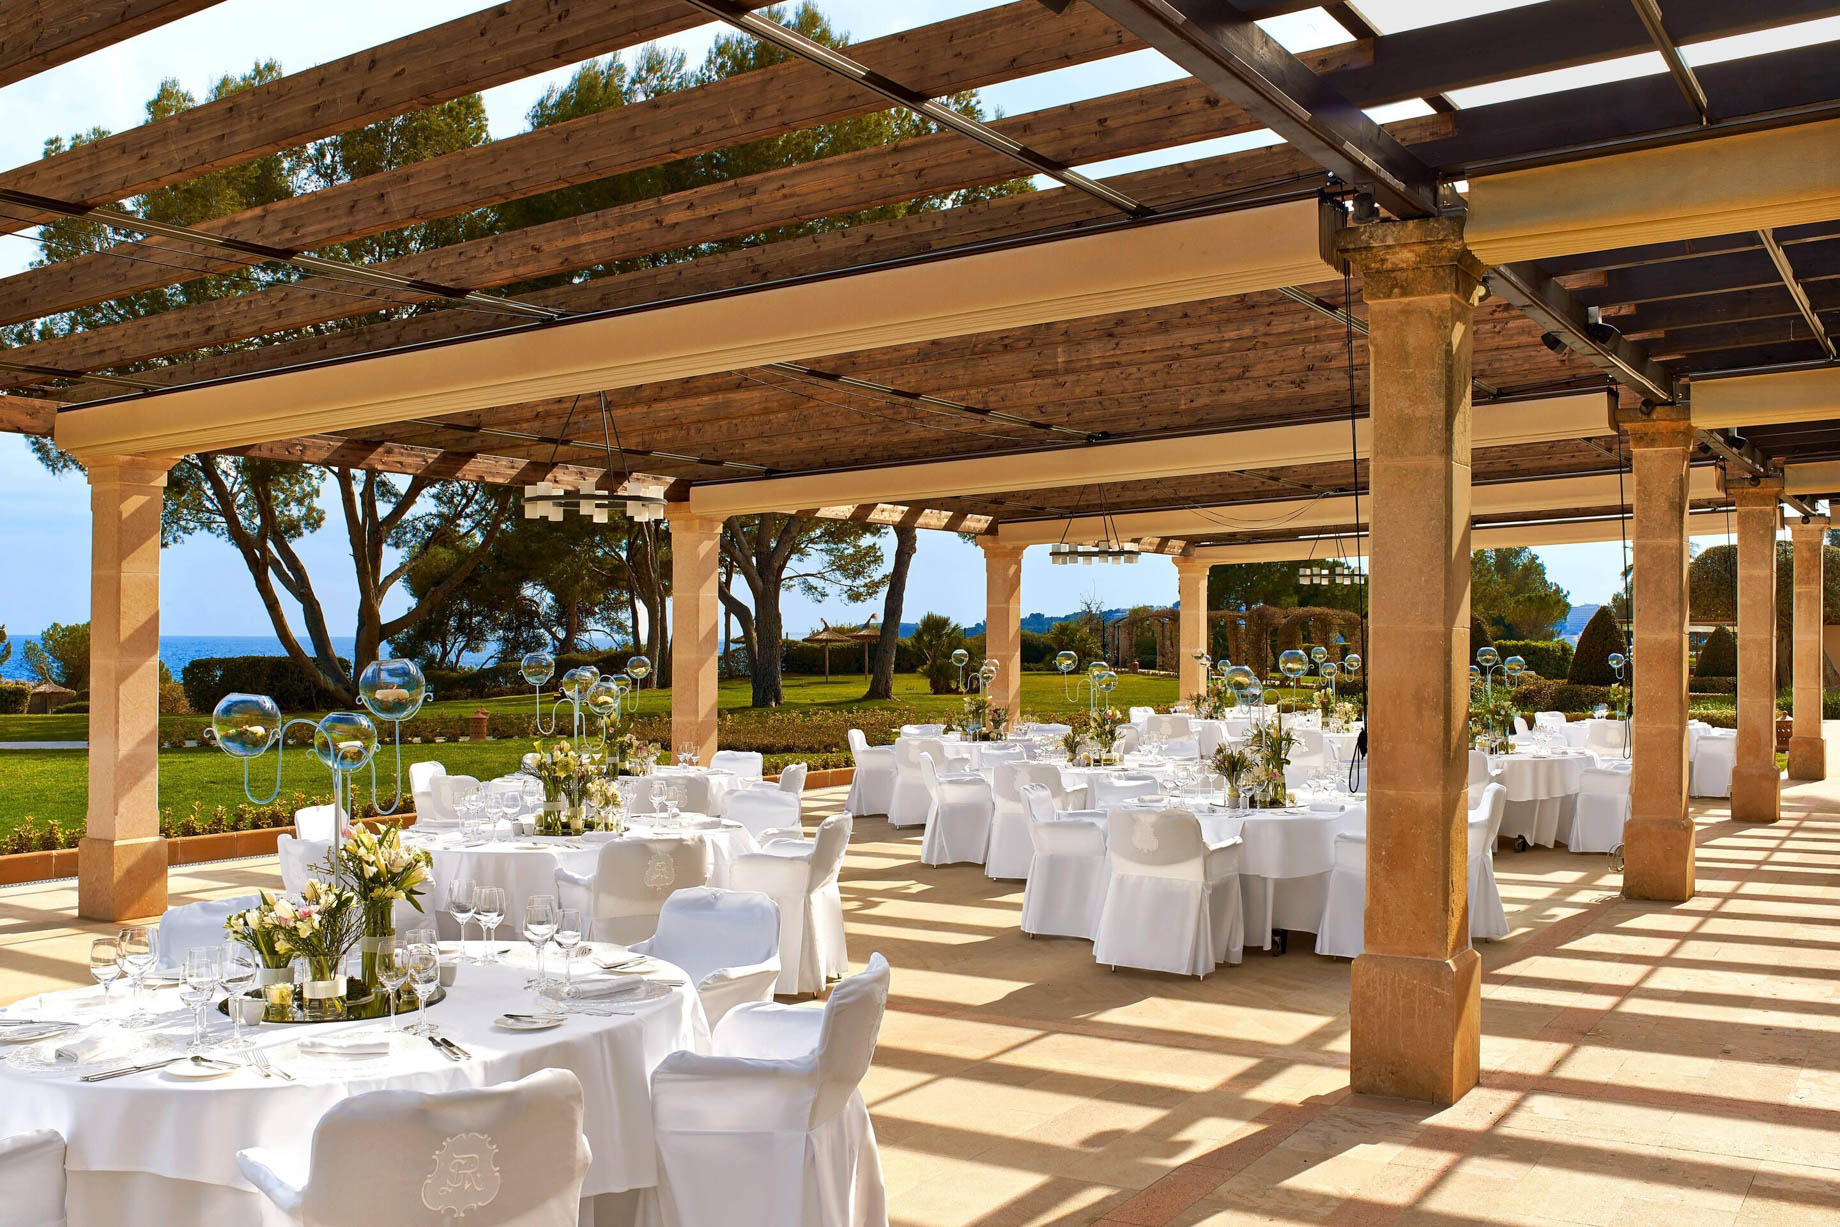 The St. Regis Mardavall Mallorca Resort – Palma de Mallorca, Spain – Ponent Terrace